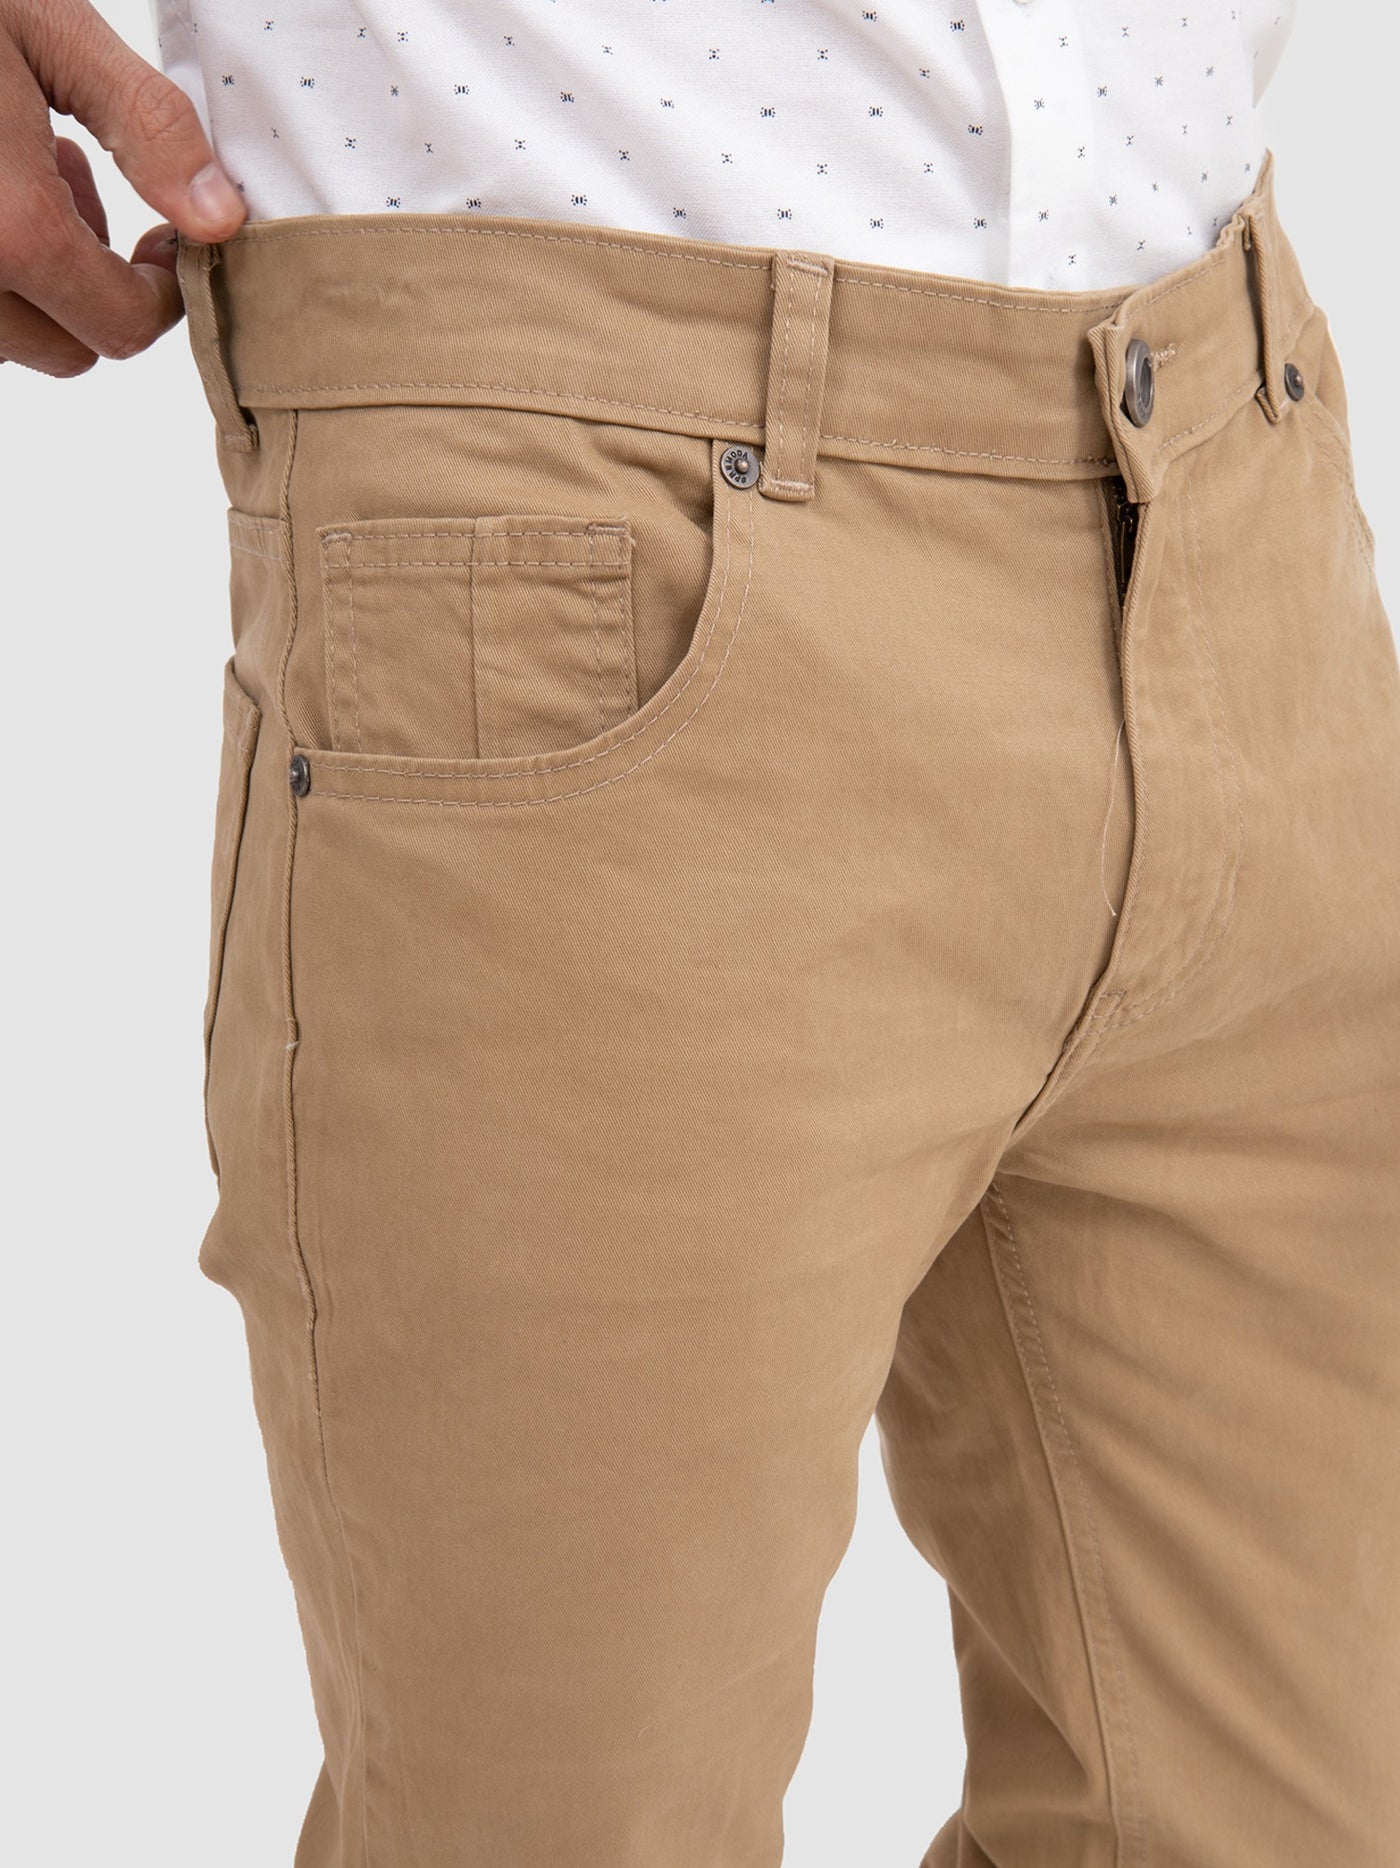 Premoda Mens Basic Pants